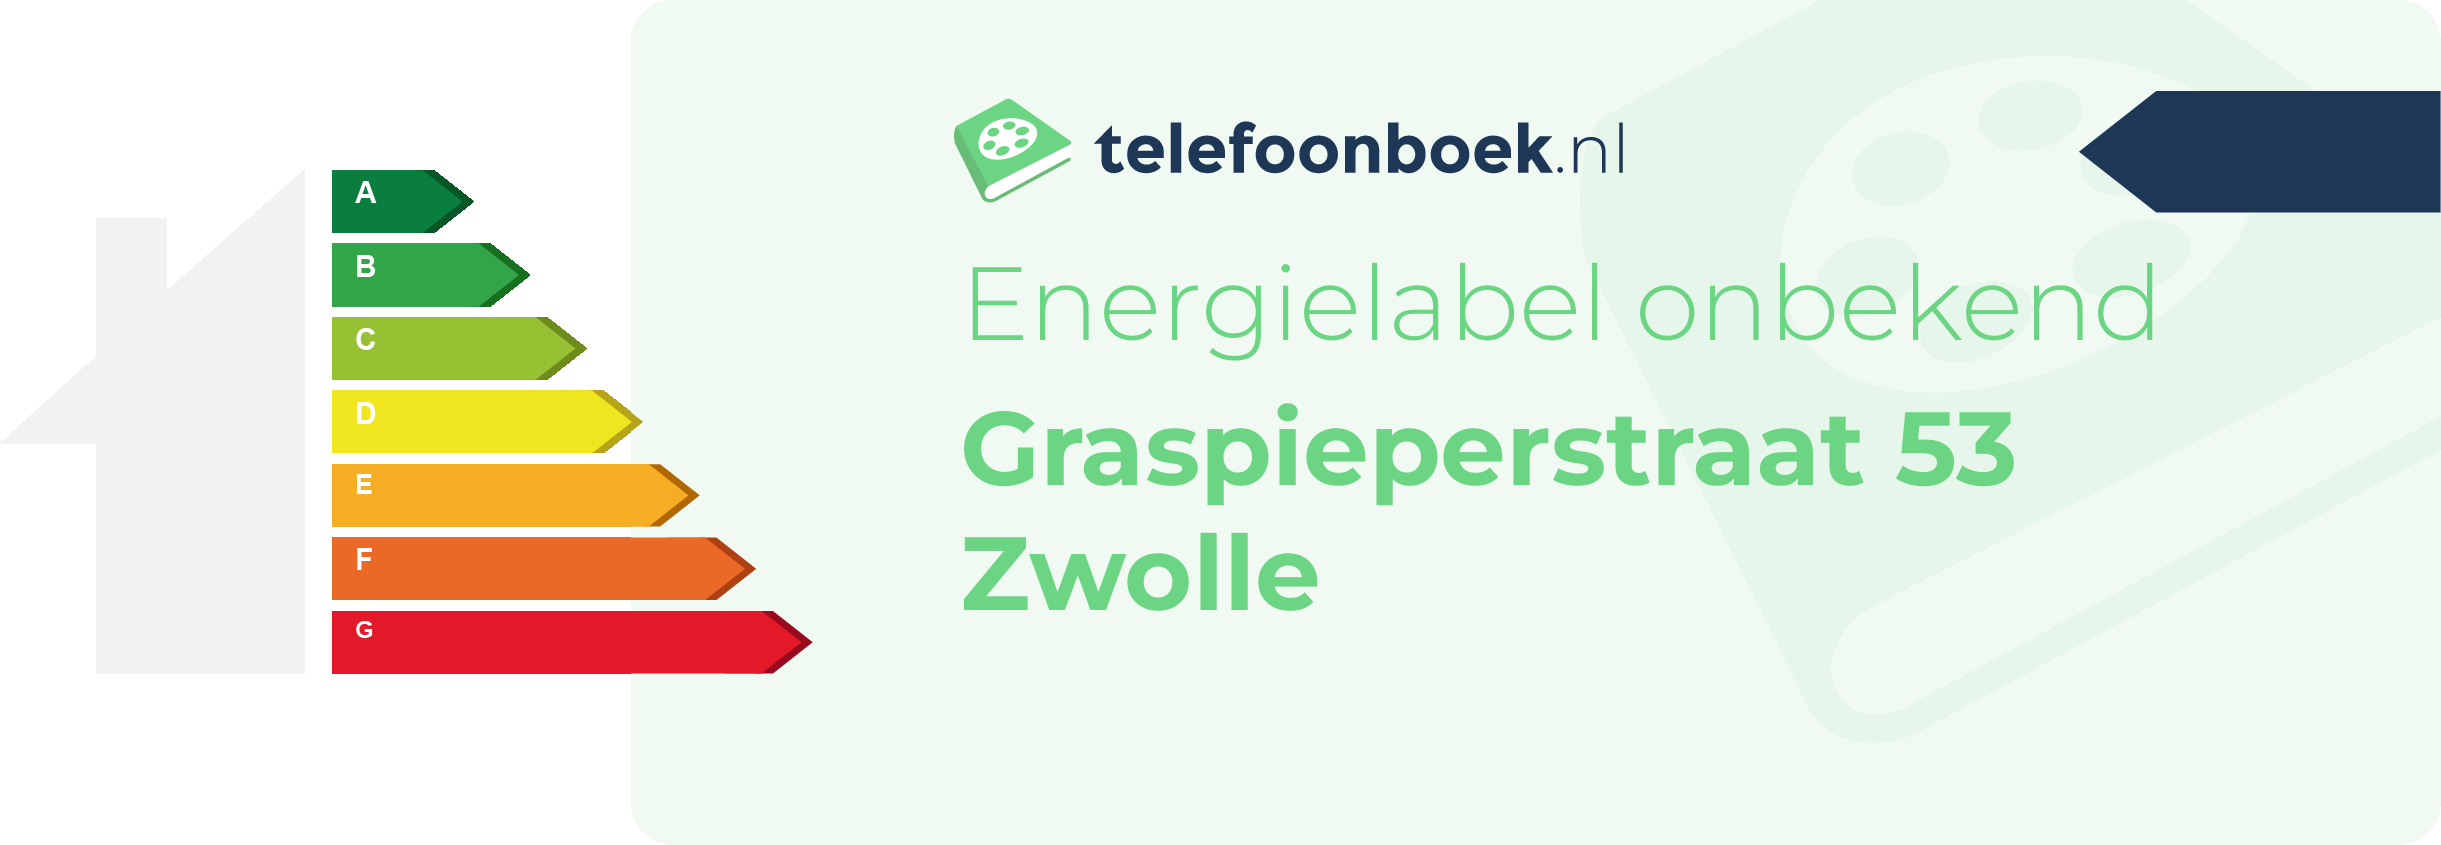 Energielabel Graspieperstraat 53 Zwolle